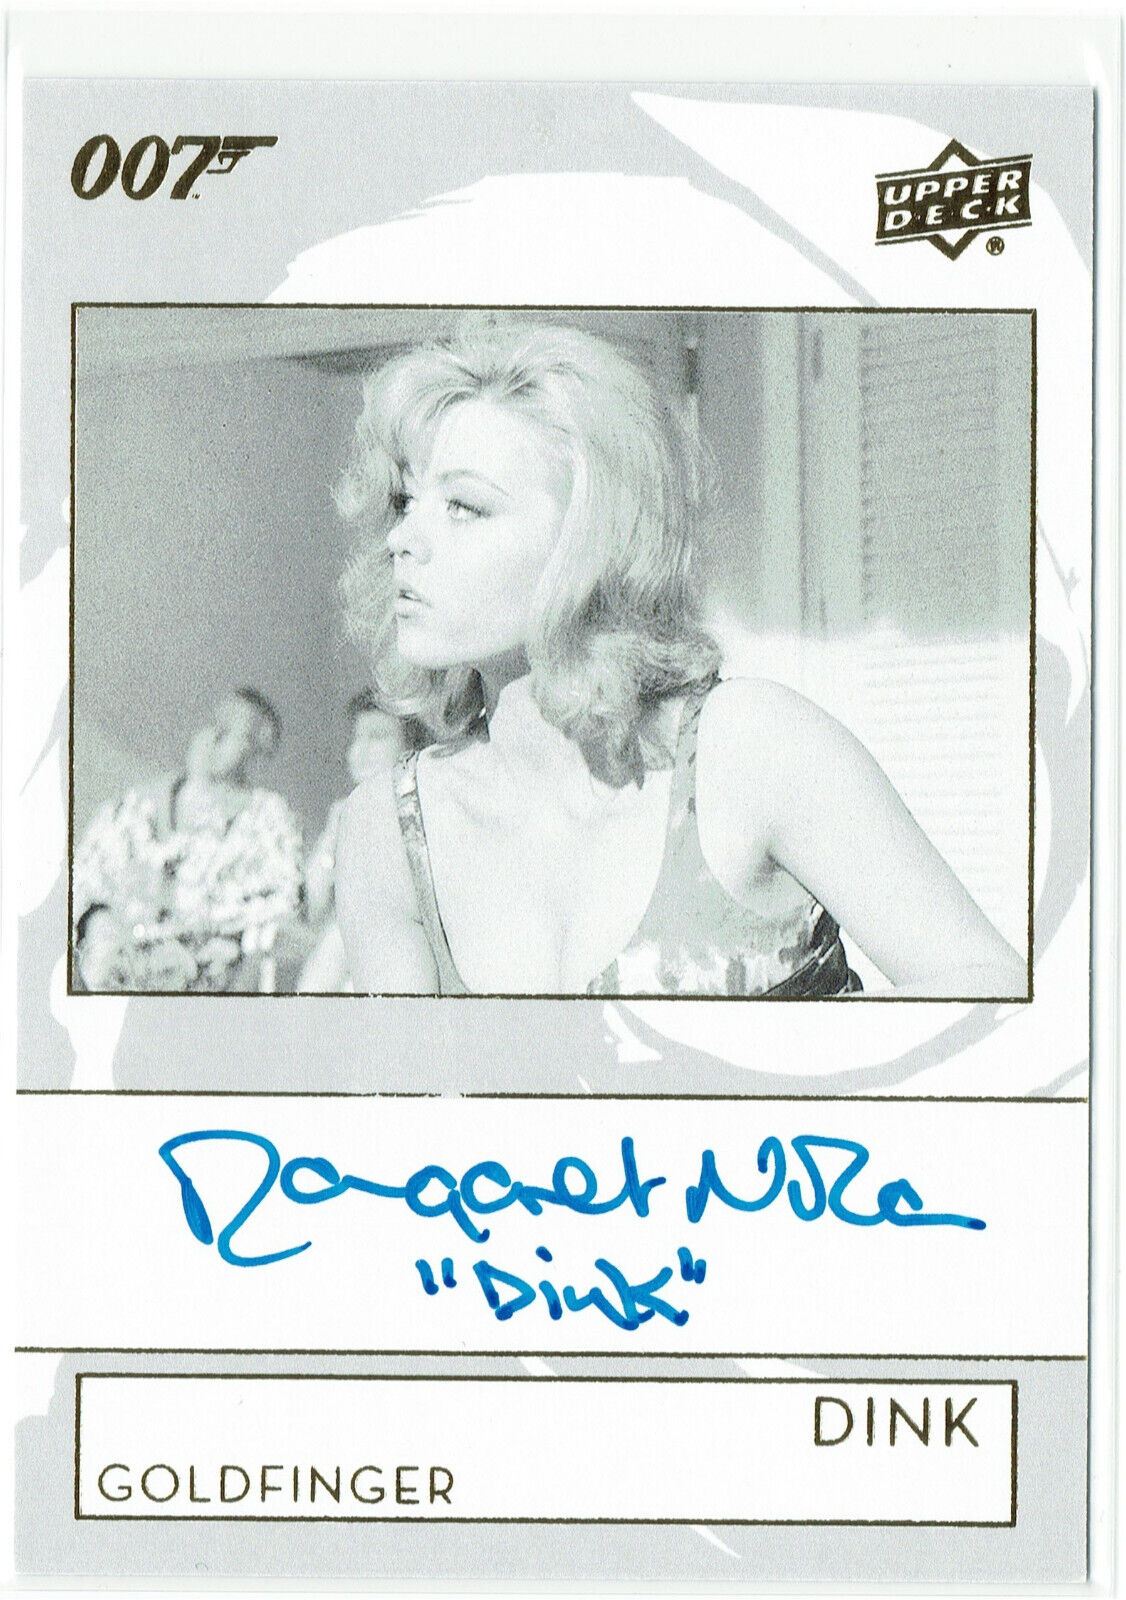 James Bond 007 Collection Auto Inscription A-MN Margaret Nolan as Dink